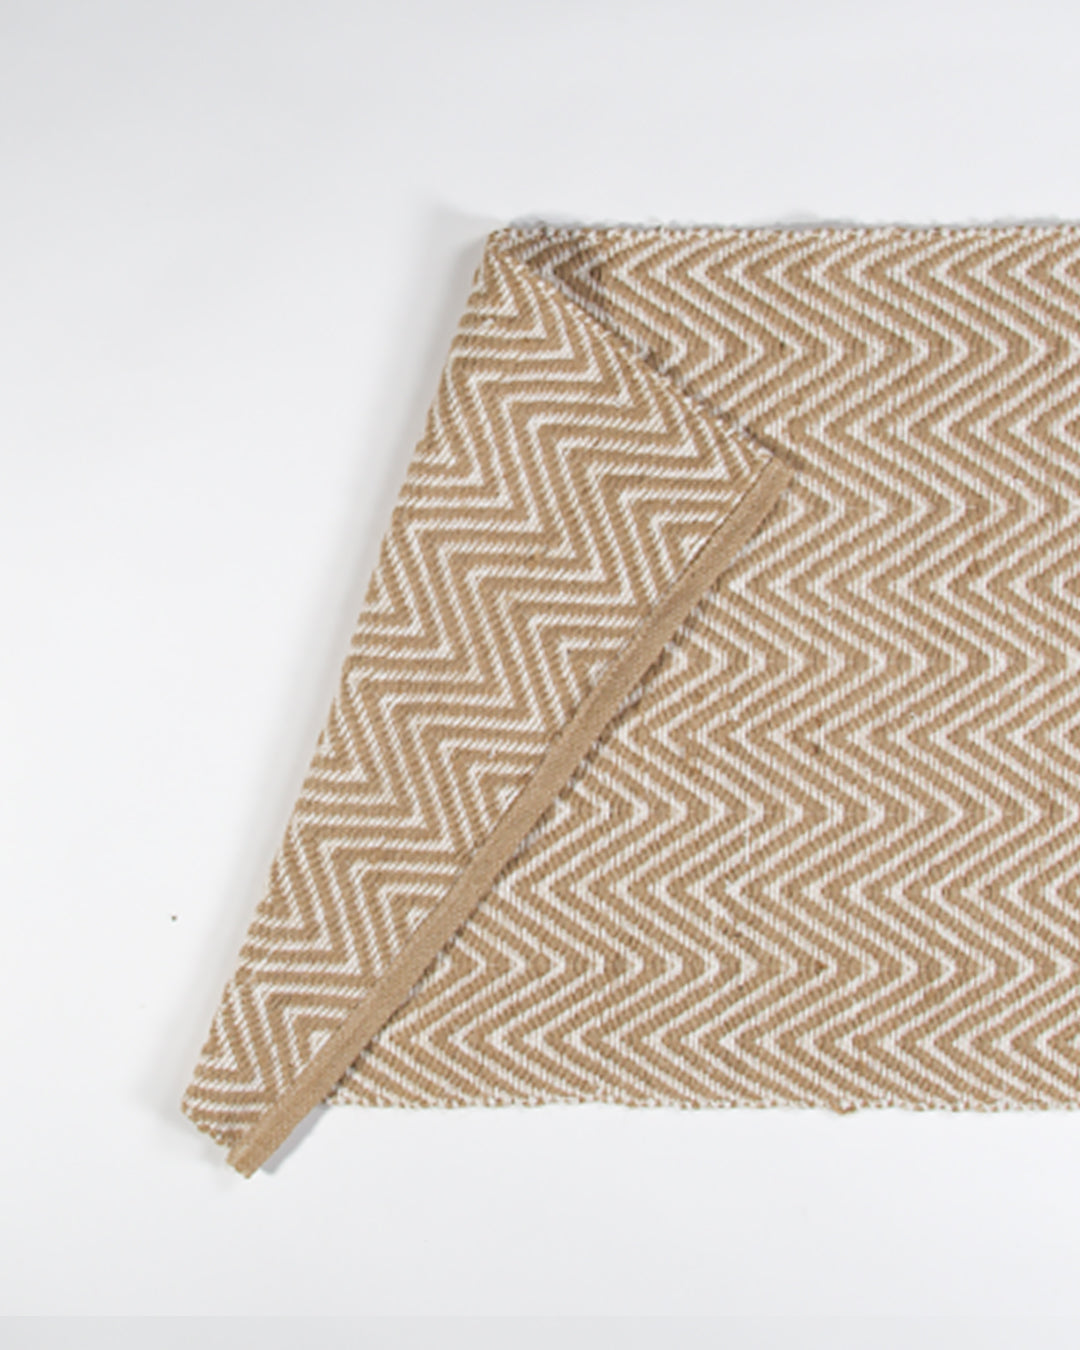 Jute and Cotton Thread Mat, Natural, Wavey Zig Zag Pattern, 60x90cm